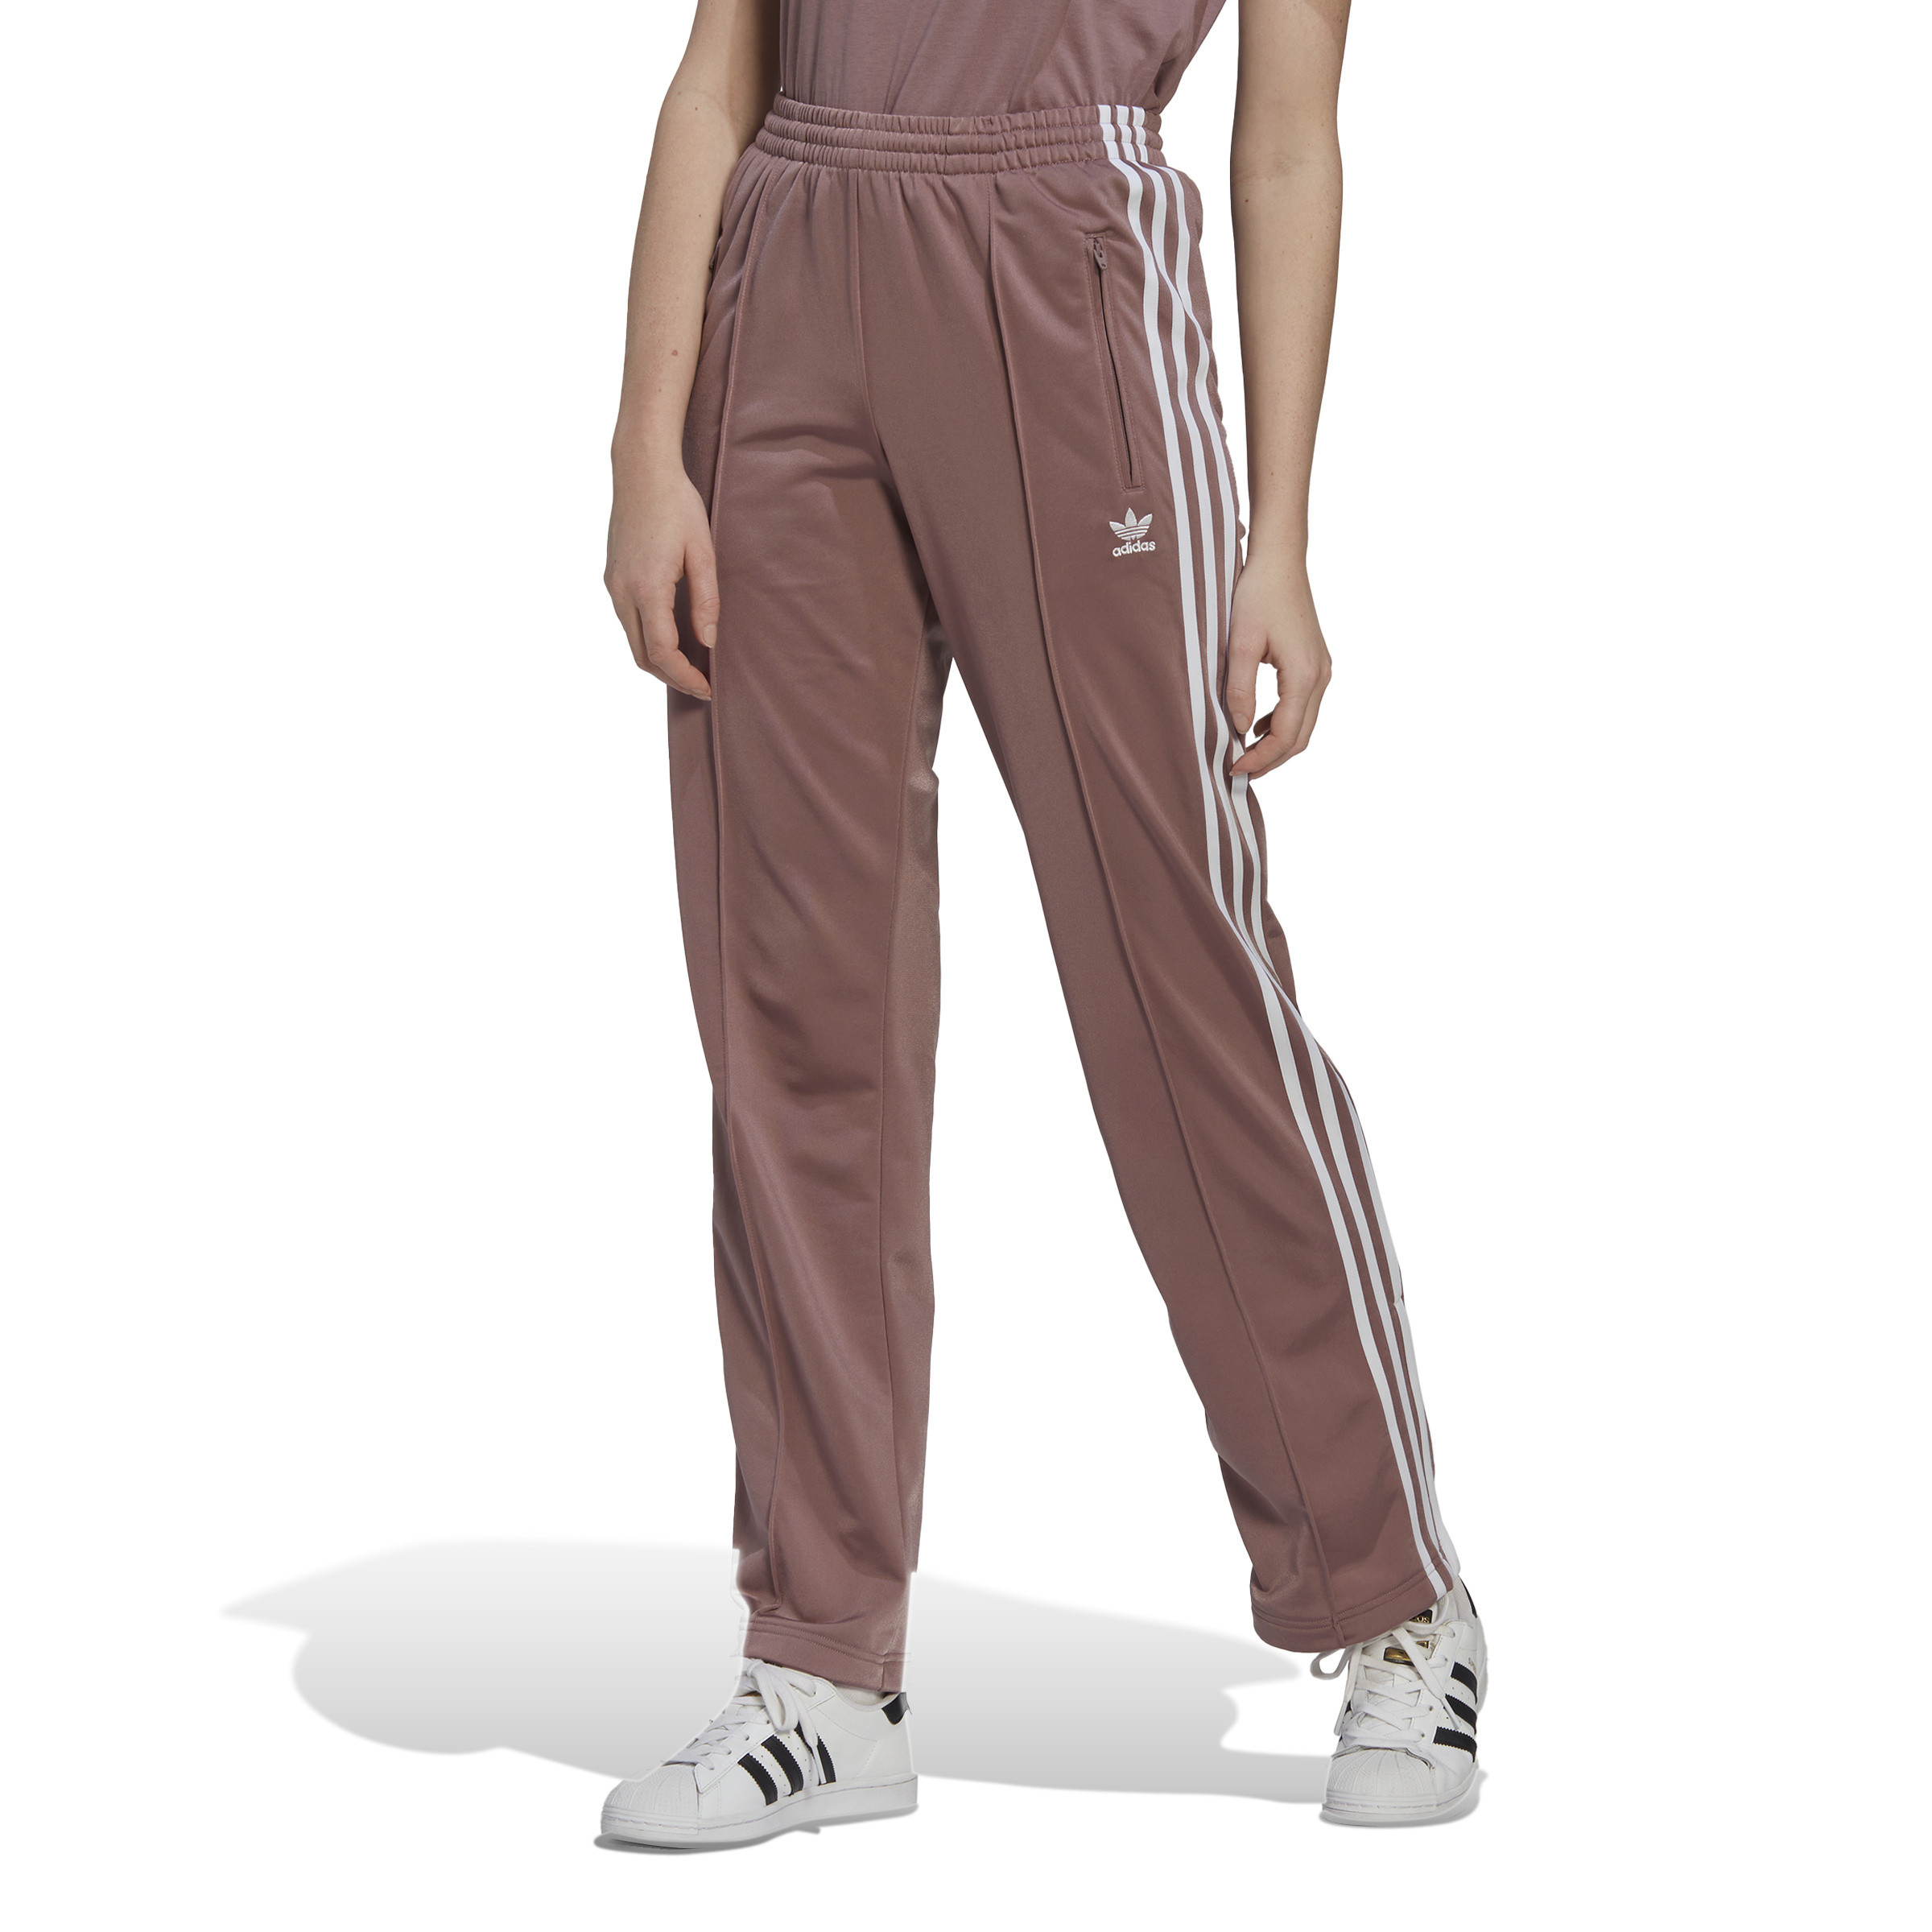 Adidas - Pantalone sportivo adicolor, Rosa antico, large image number 4